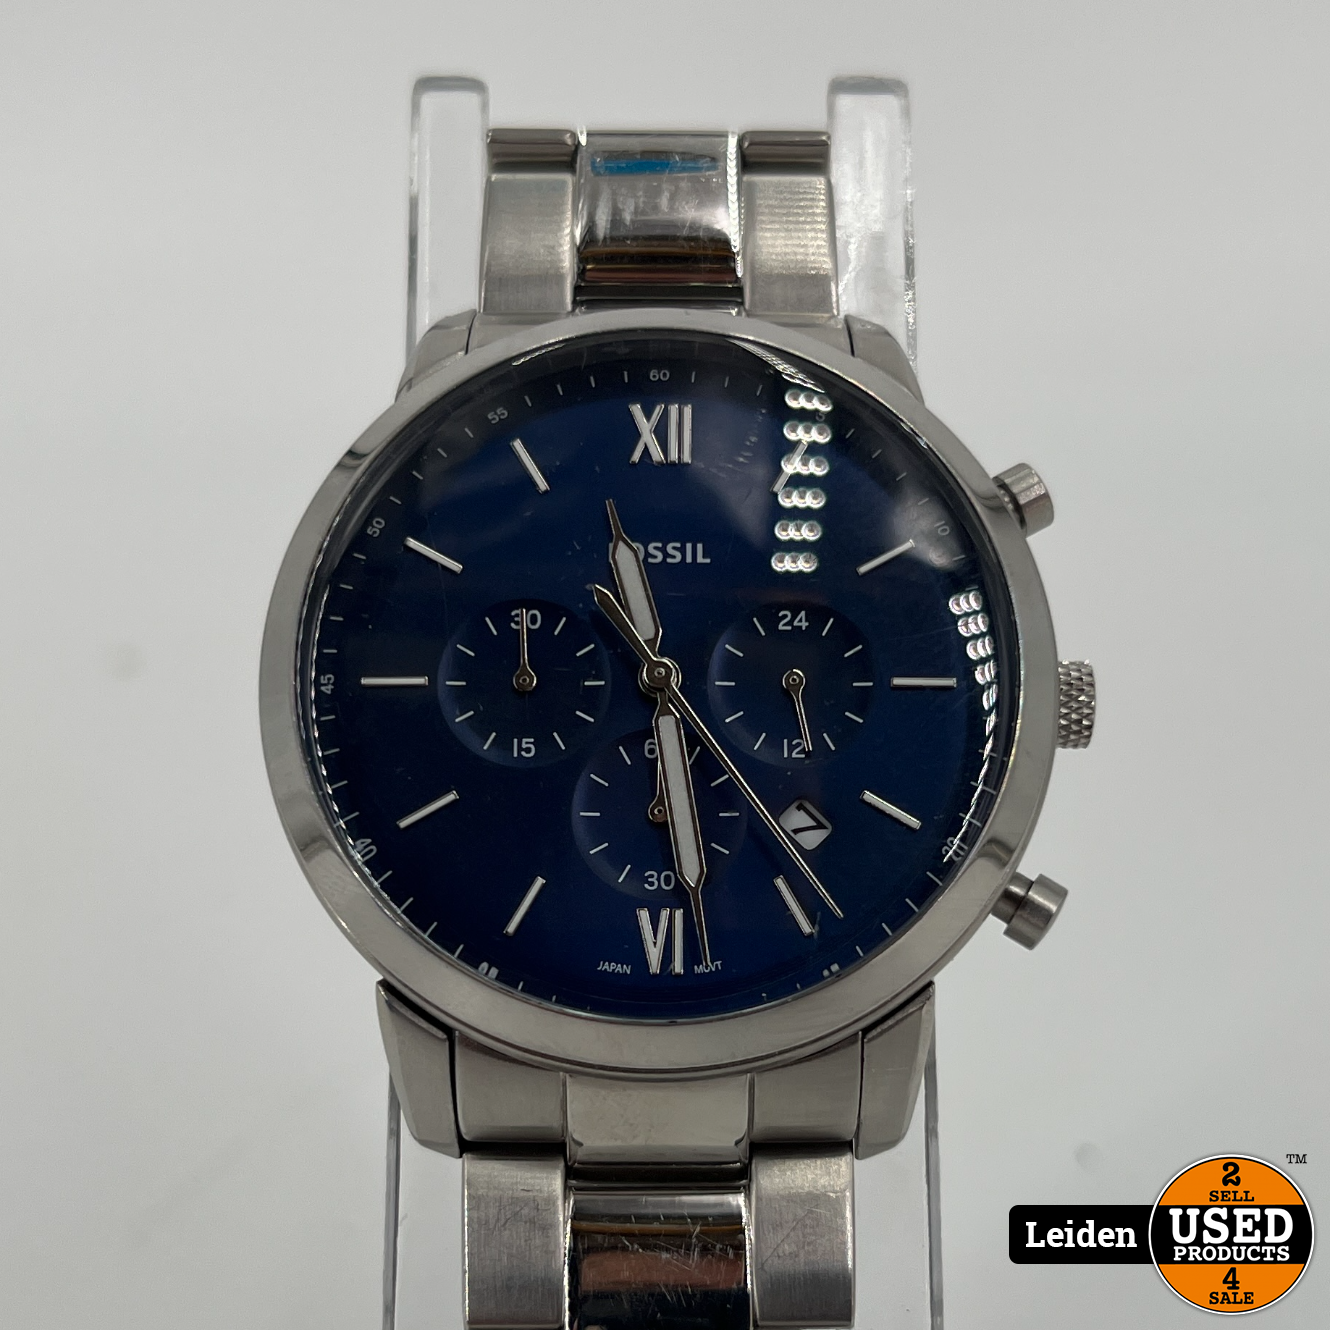 Horloge Used - Products Chrono Fossil Leiden FS5792 Neutra